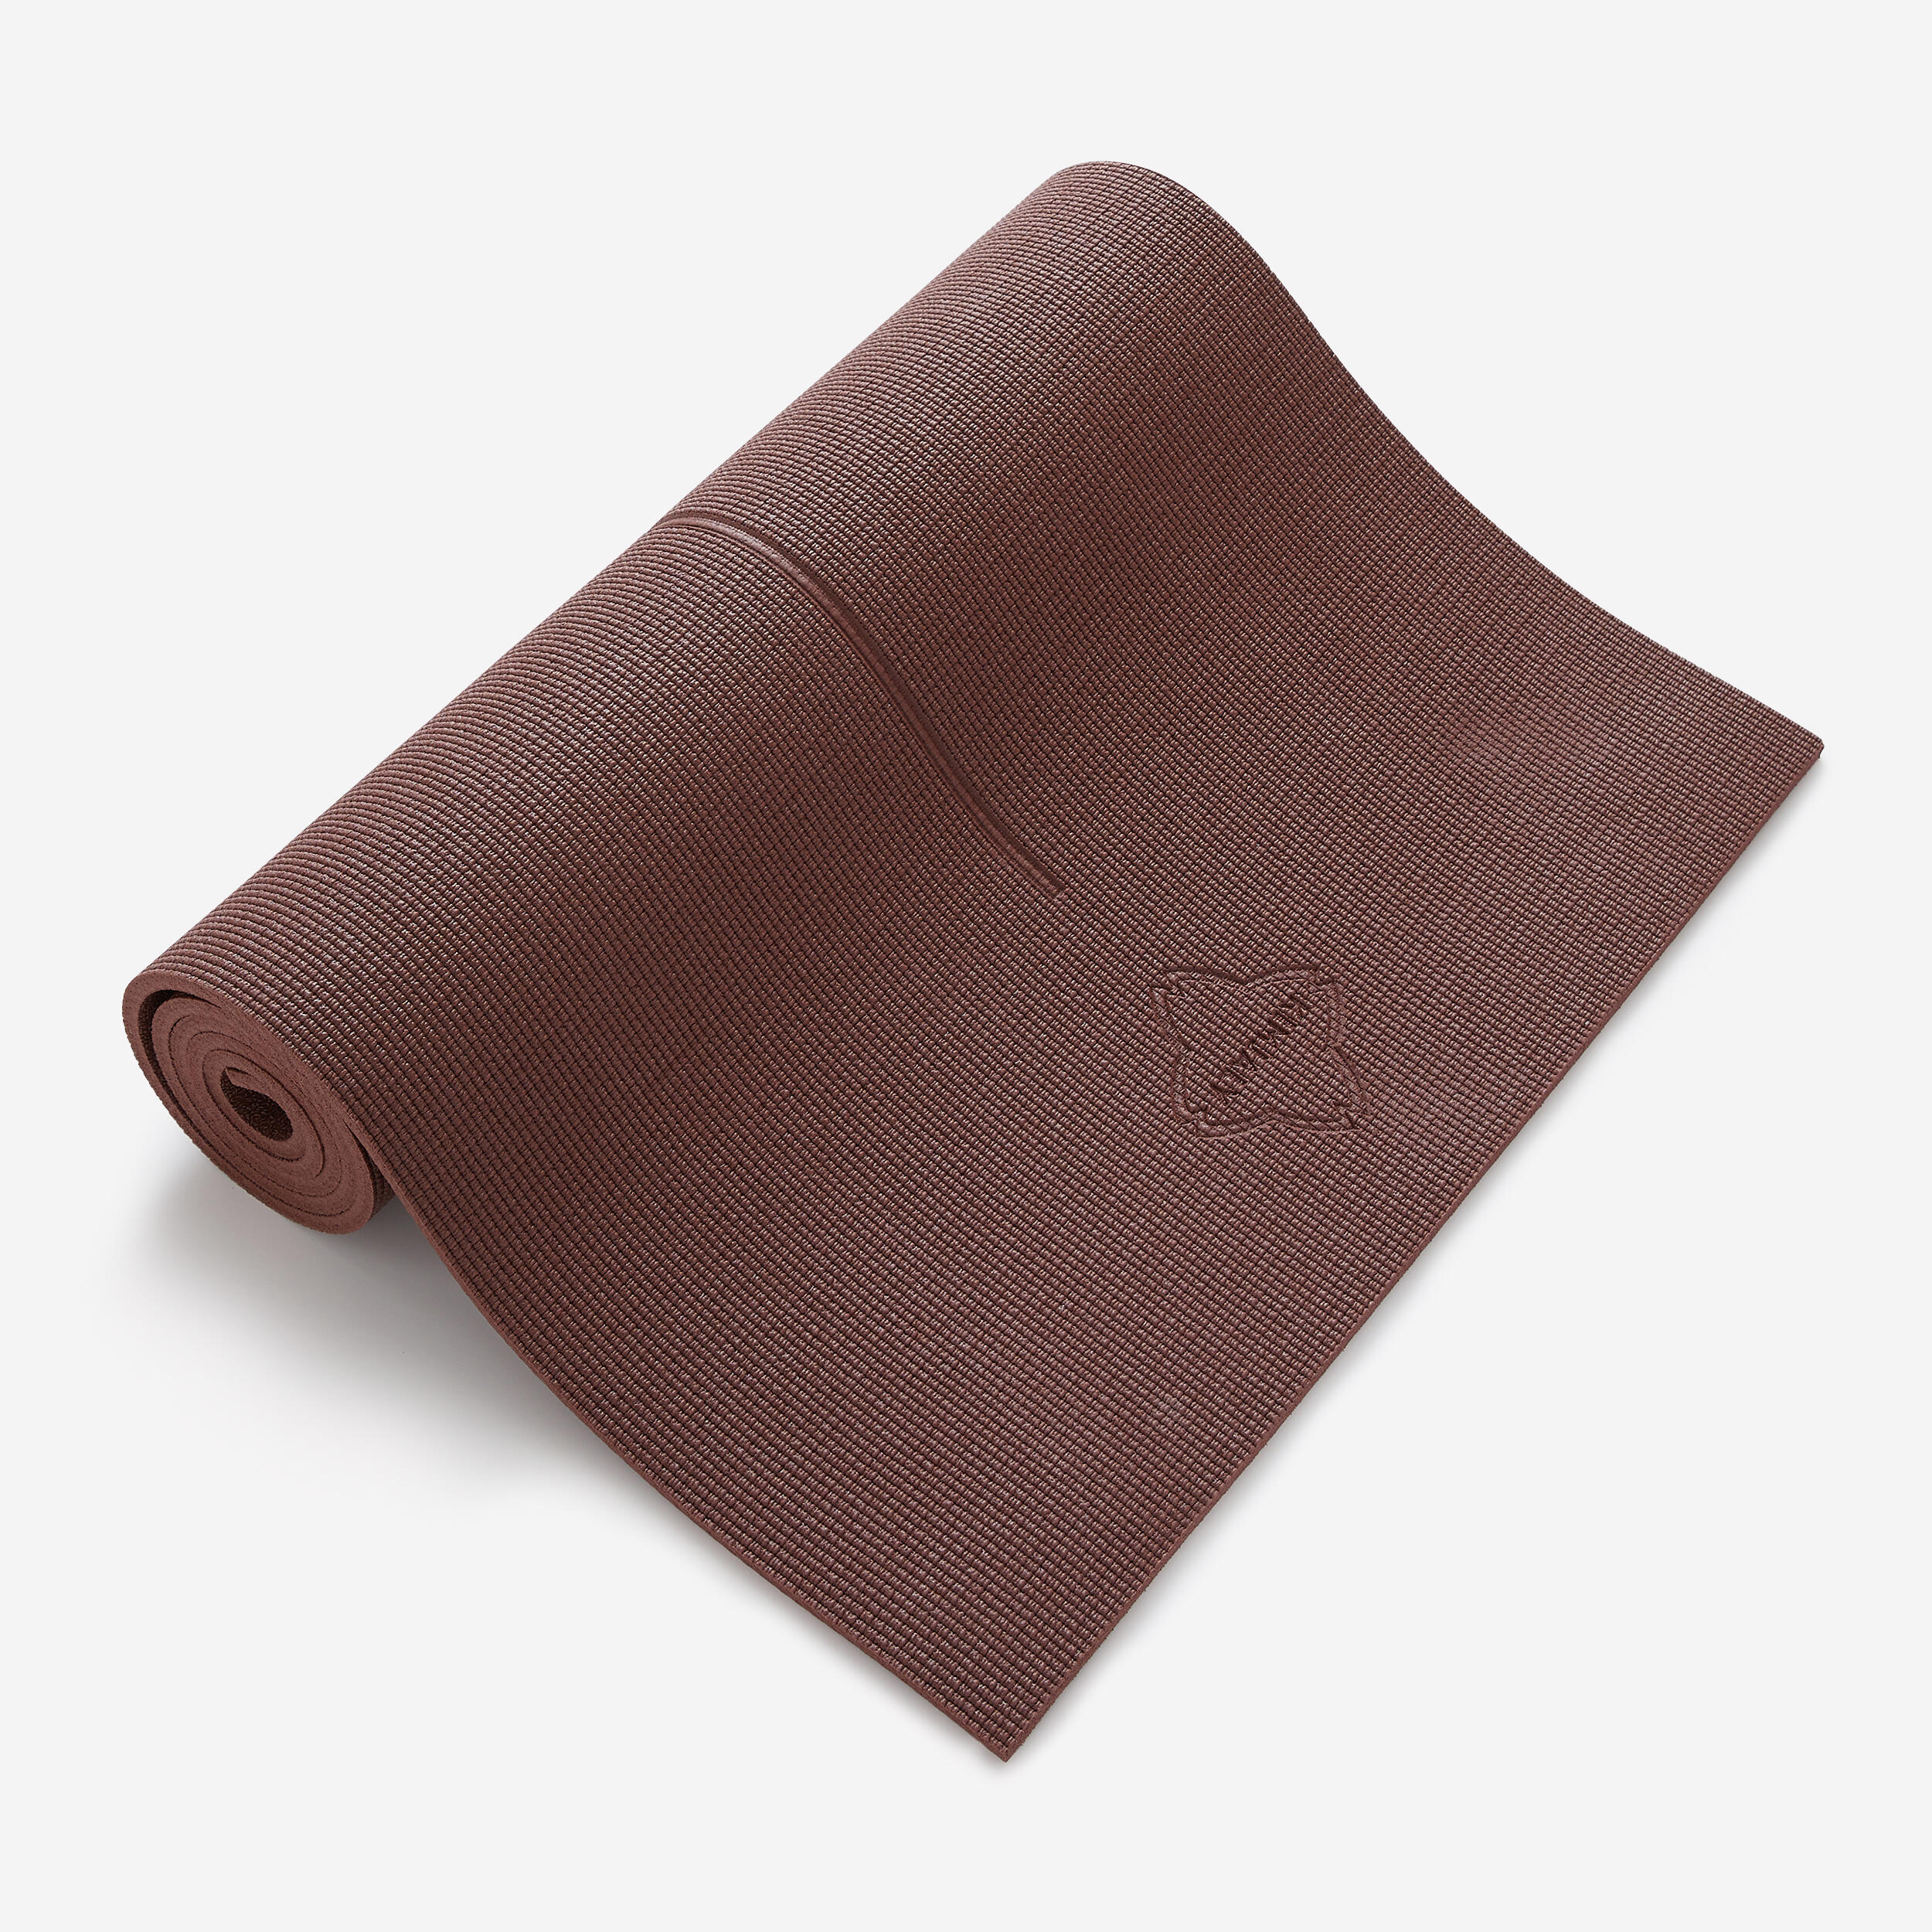 Gentle Yoga Comfort Mat 173 cm ⨯ 61 cm ⨯ 8 mm - Mahogany 2/4